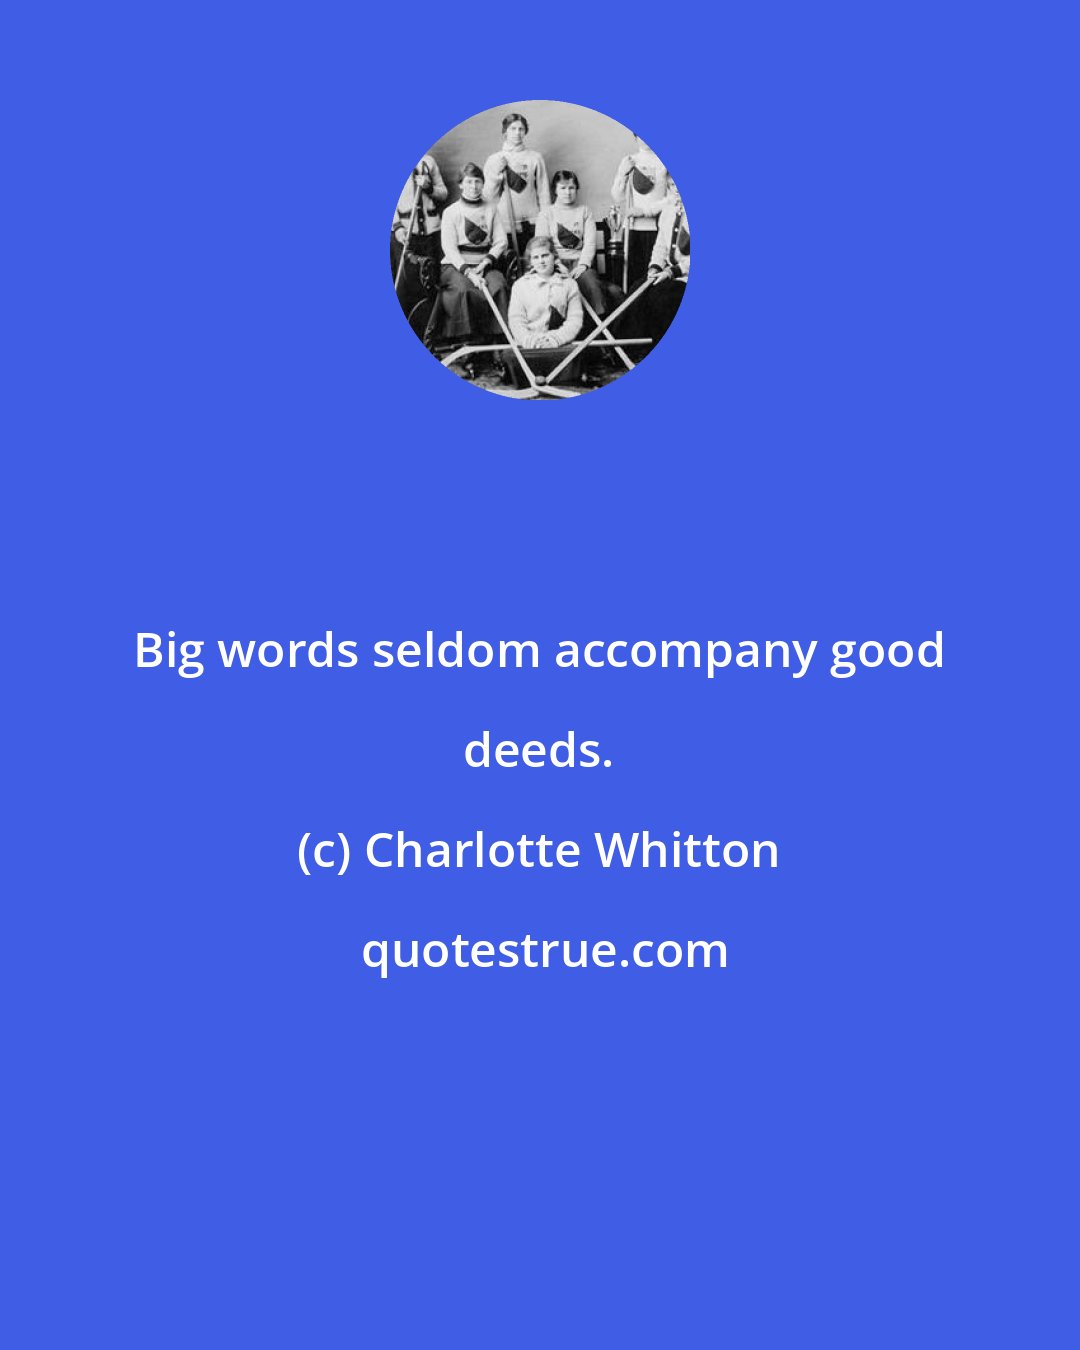 Charlotte Whitton: Big words seldom accompany good deeds.